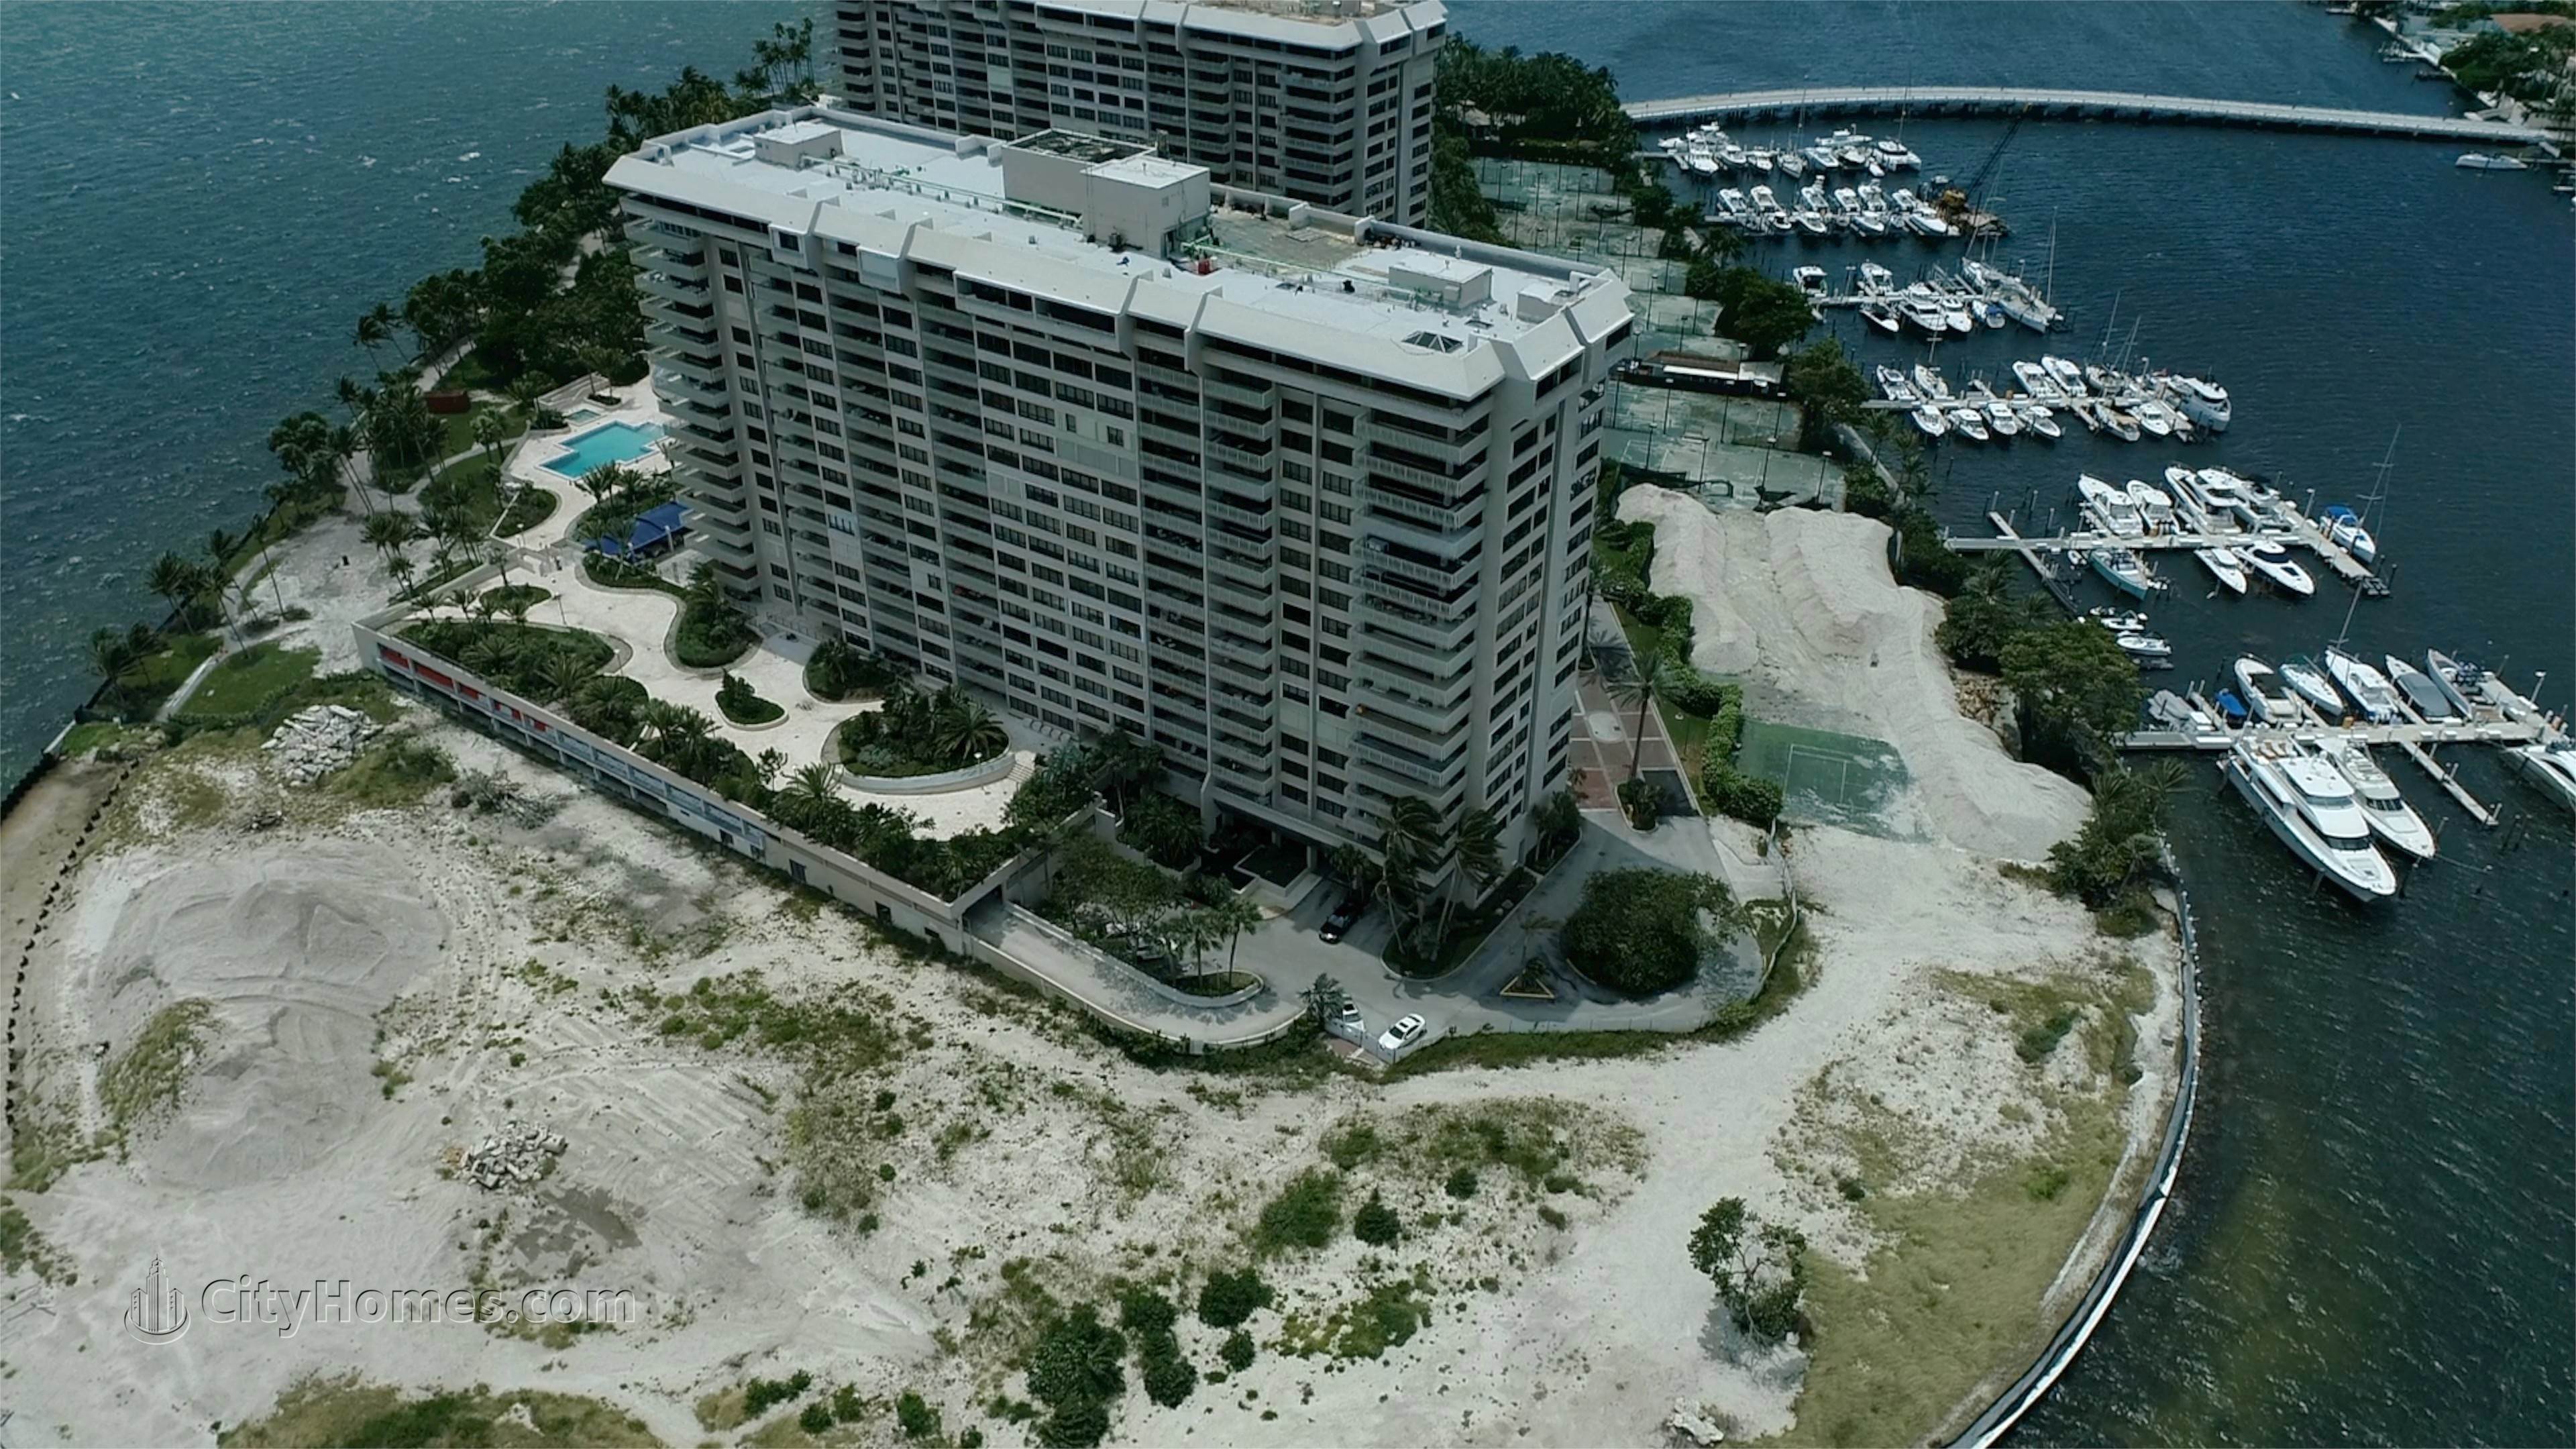 4. The Markers Grove Isle building at 4 Grove Isle Drive, Miami, FL 33133